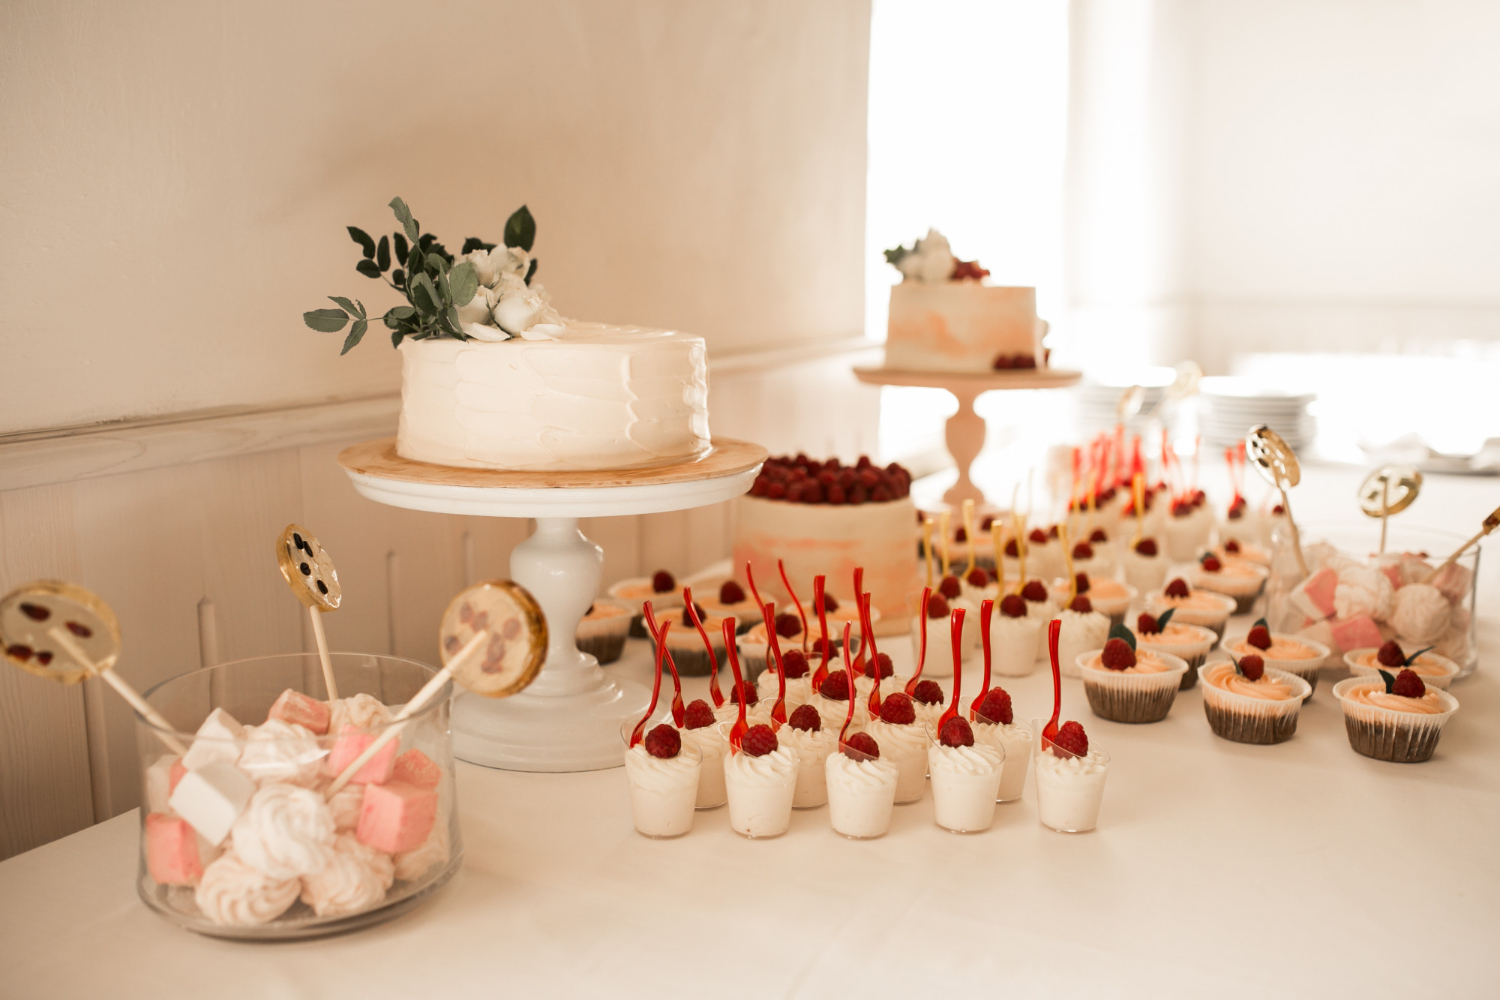 Dessert Table Display: Delightful Treats to Sweeten Your Home Birthday Celebration